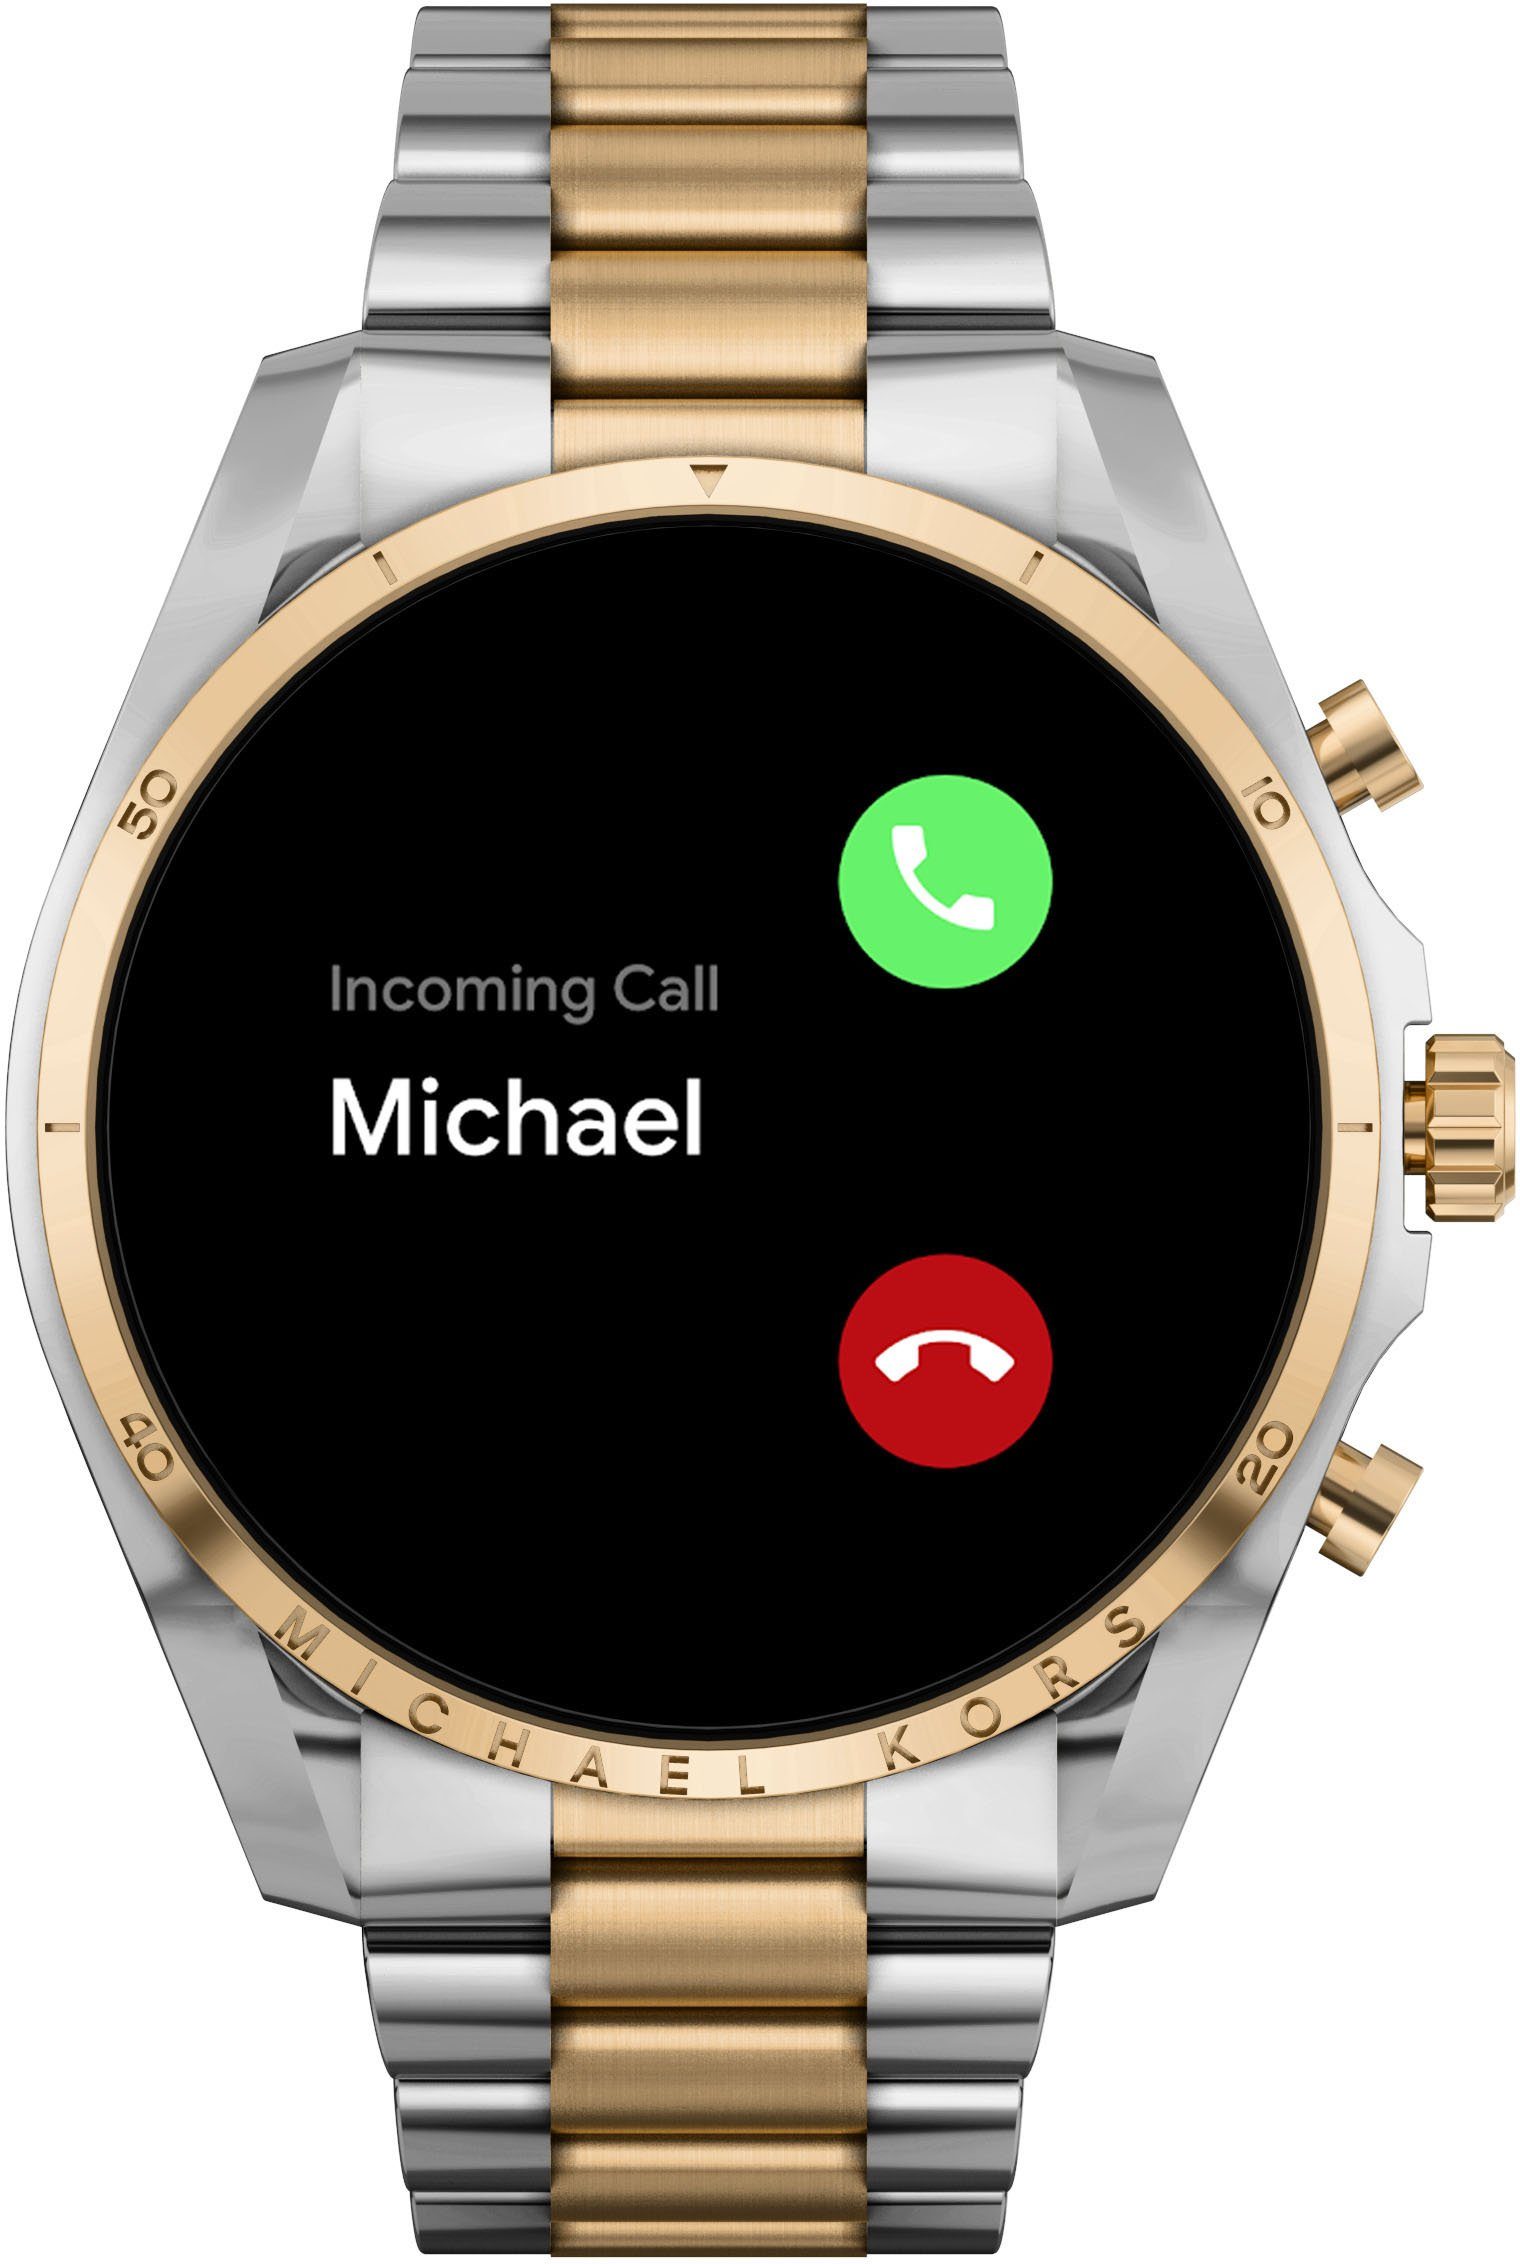 MICHAEL KORS ACCESS BRADSHAW (GEN 6), MKT5134 Smartwatch (Wear OS by Google)